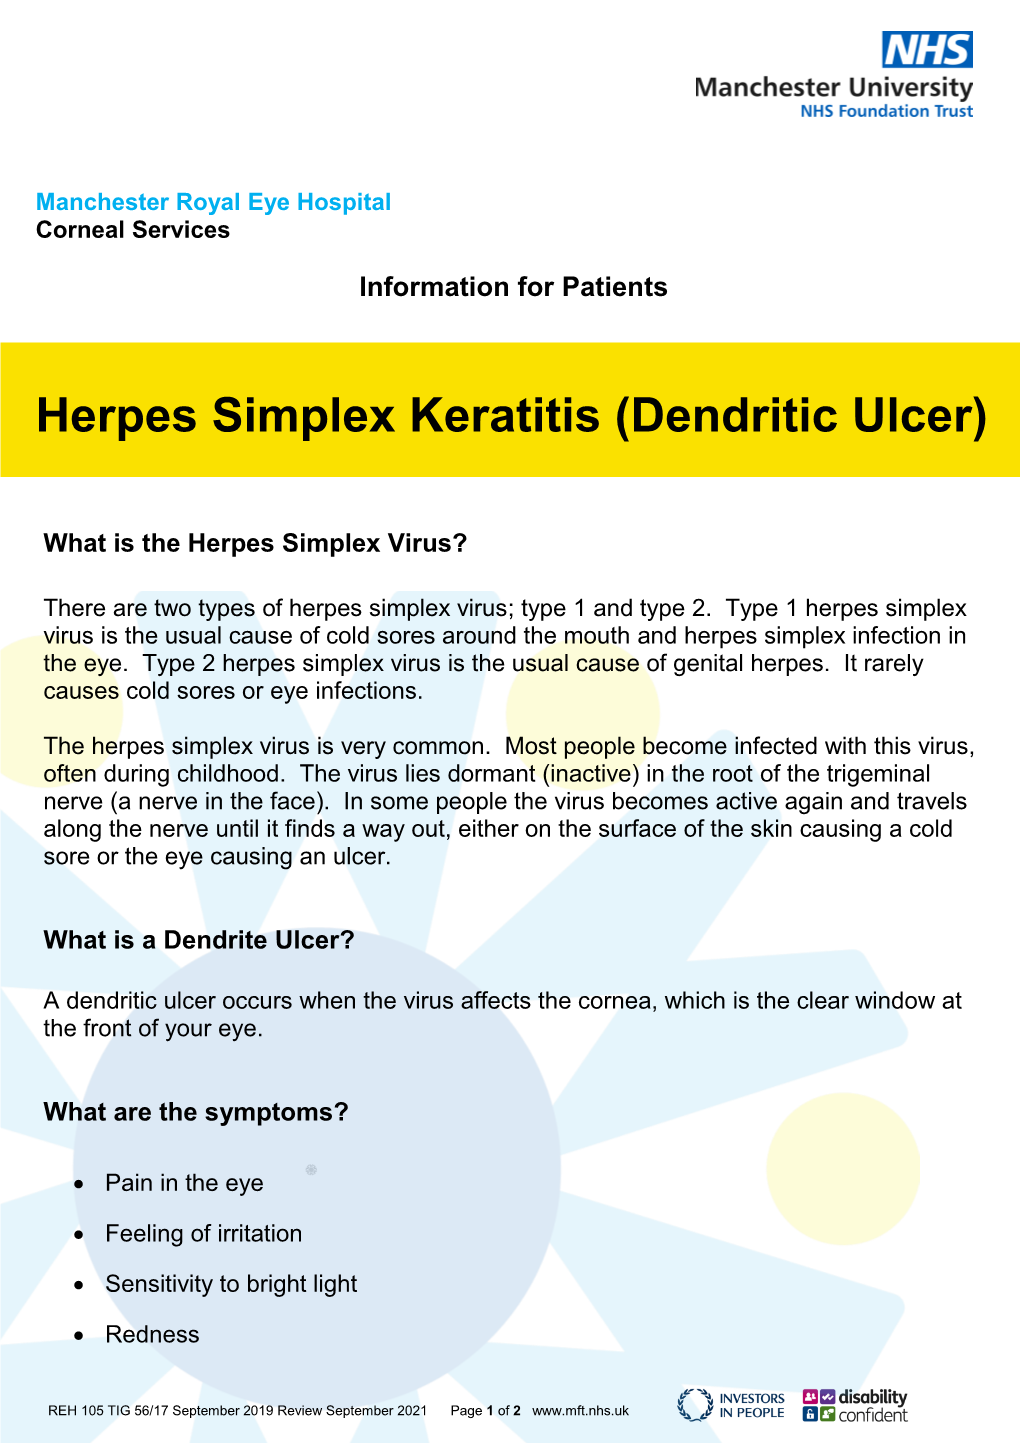 Herpes Simplex Keratitis (Dendritic Ulcer)